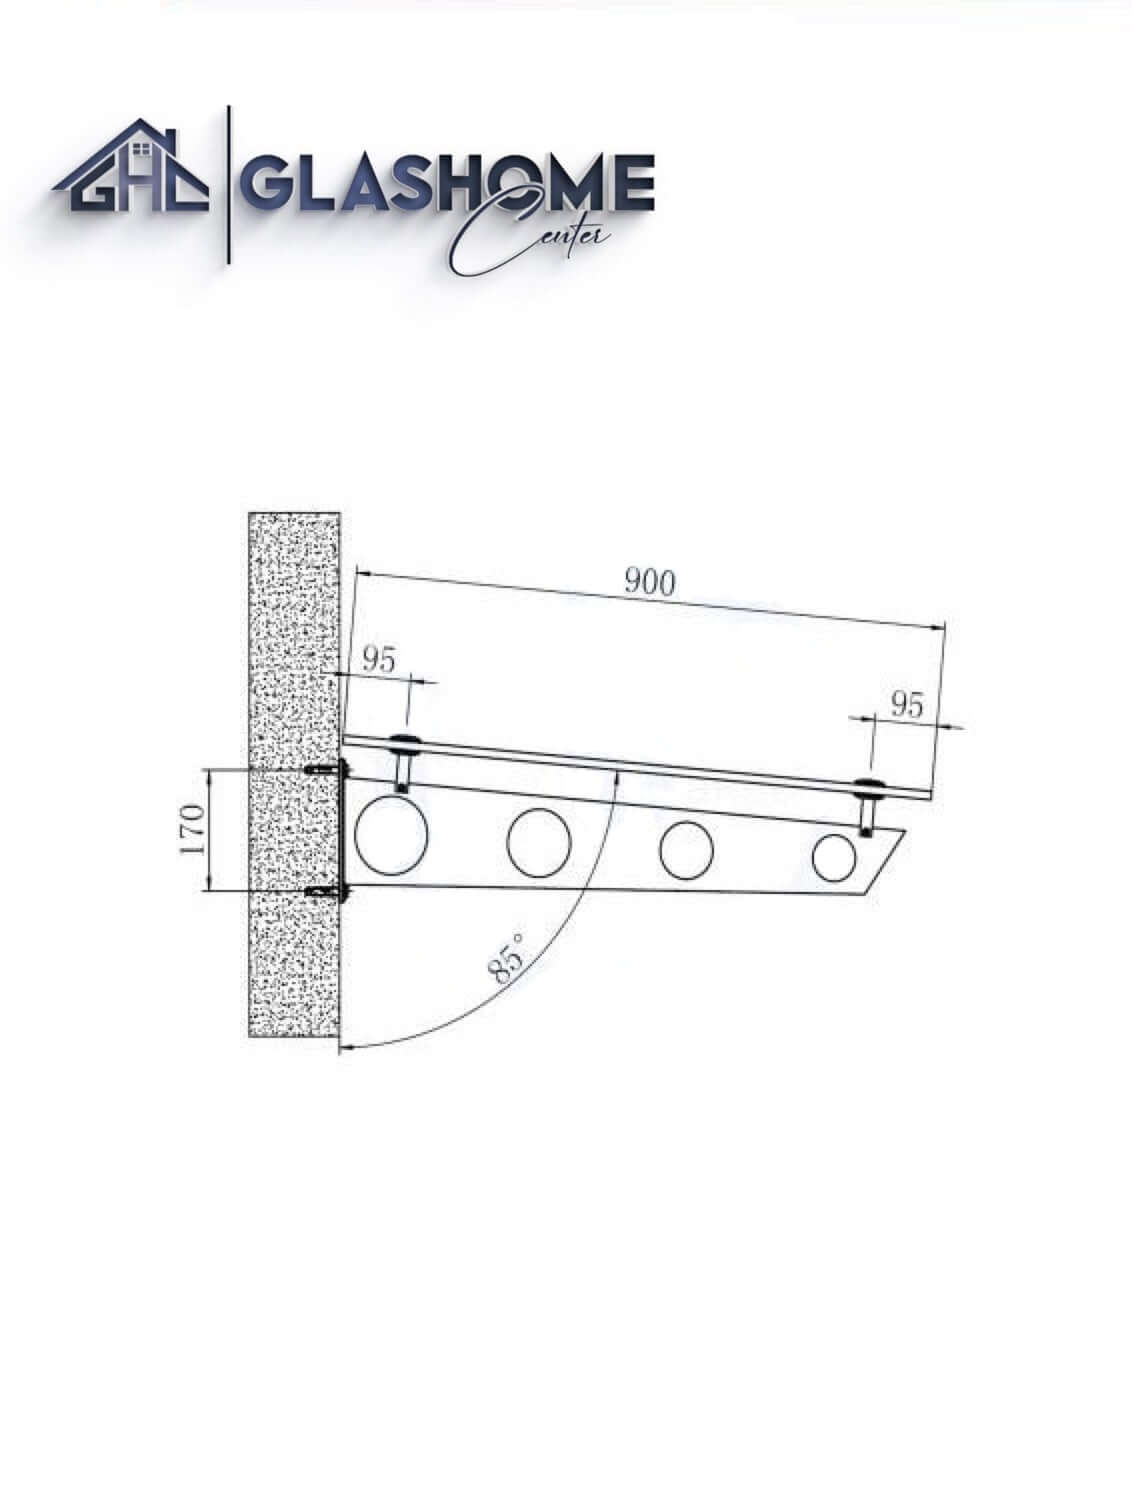 GlasHomeCenter - glass canopy - Clear glass - 170x90cm - 13.1mm VSG - incl. 2 Edelstahlhalterungen Variant "Stockholm"